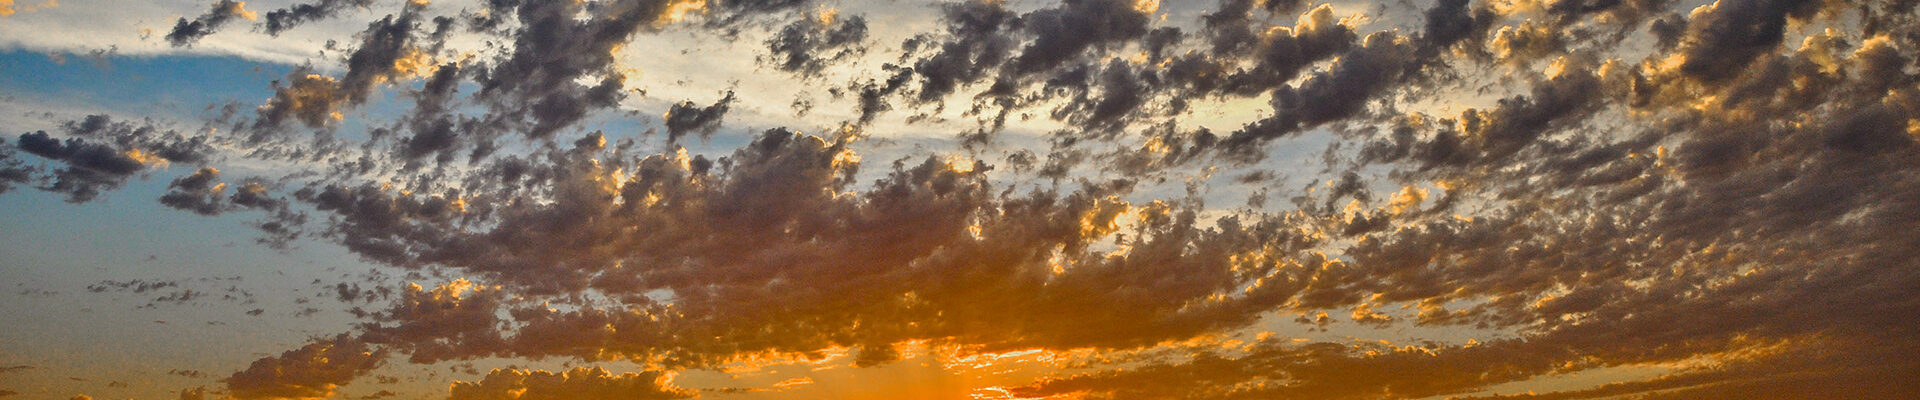 Sunset sky over cowlitz county